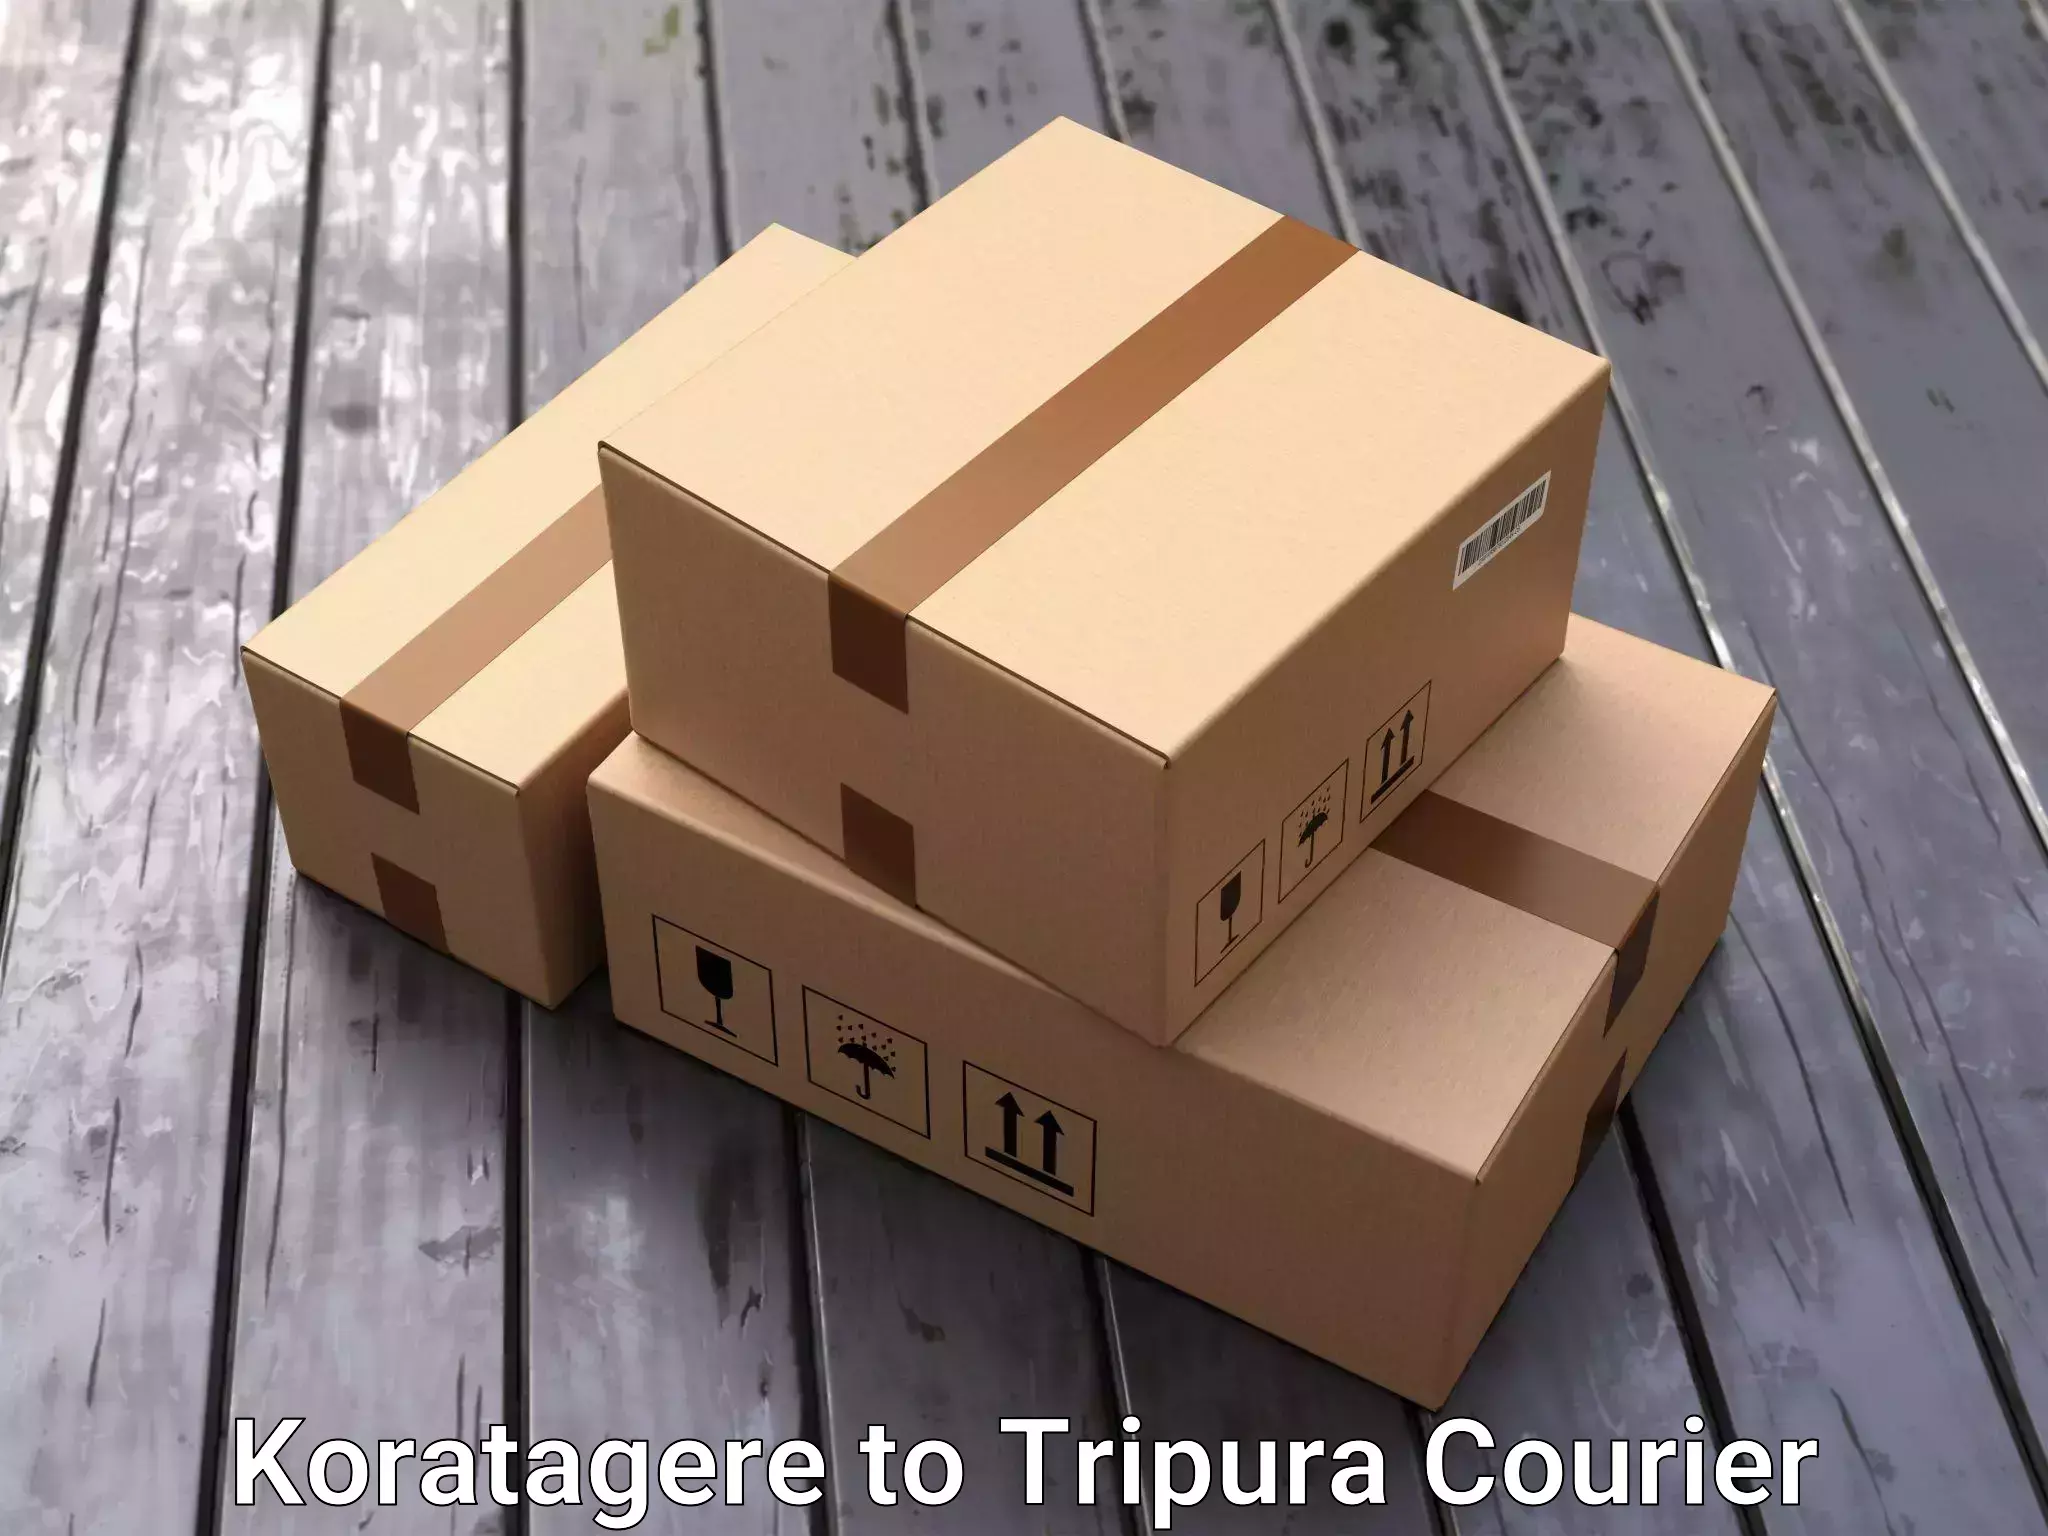 Reliable movers Koratagere to Udaipur Tripura